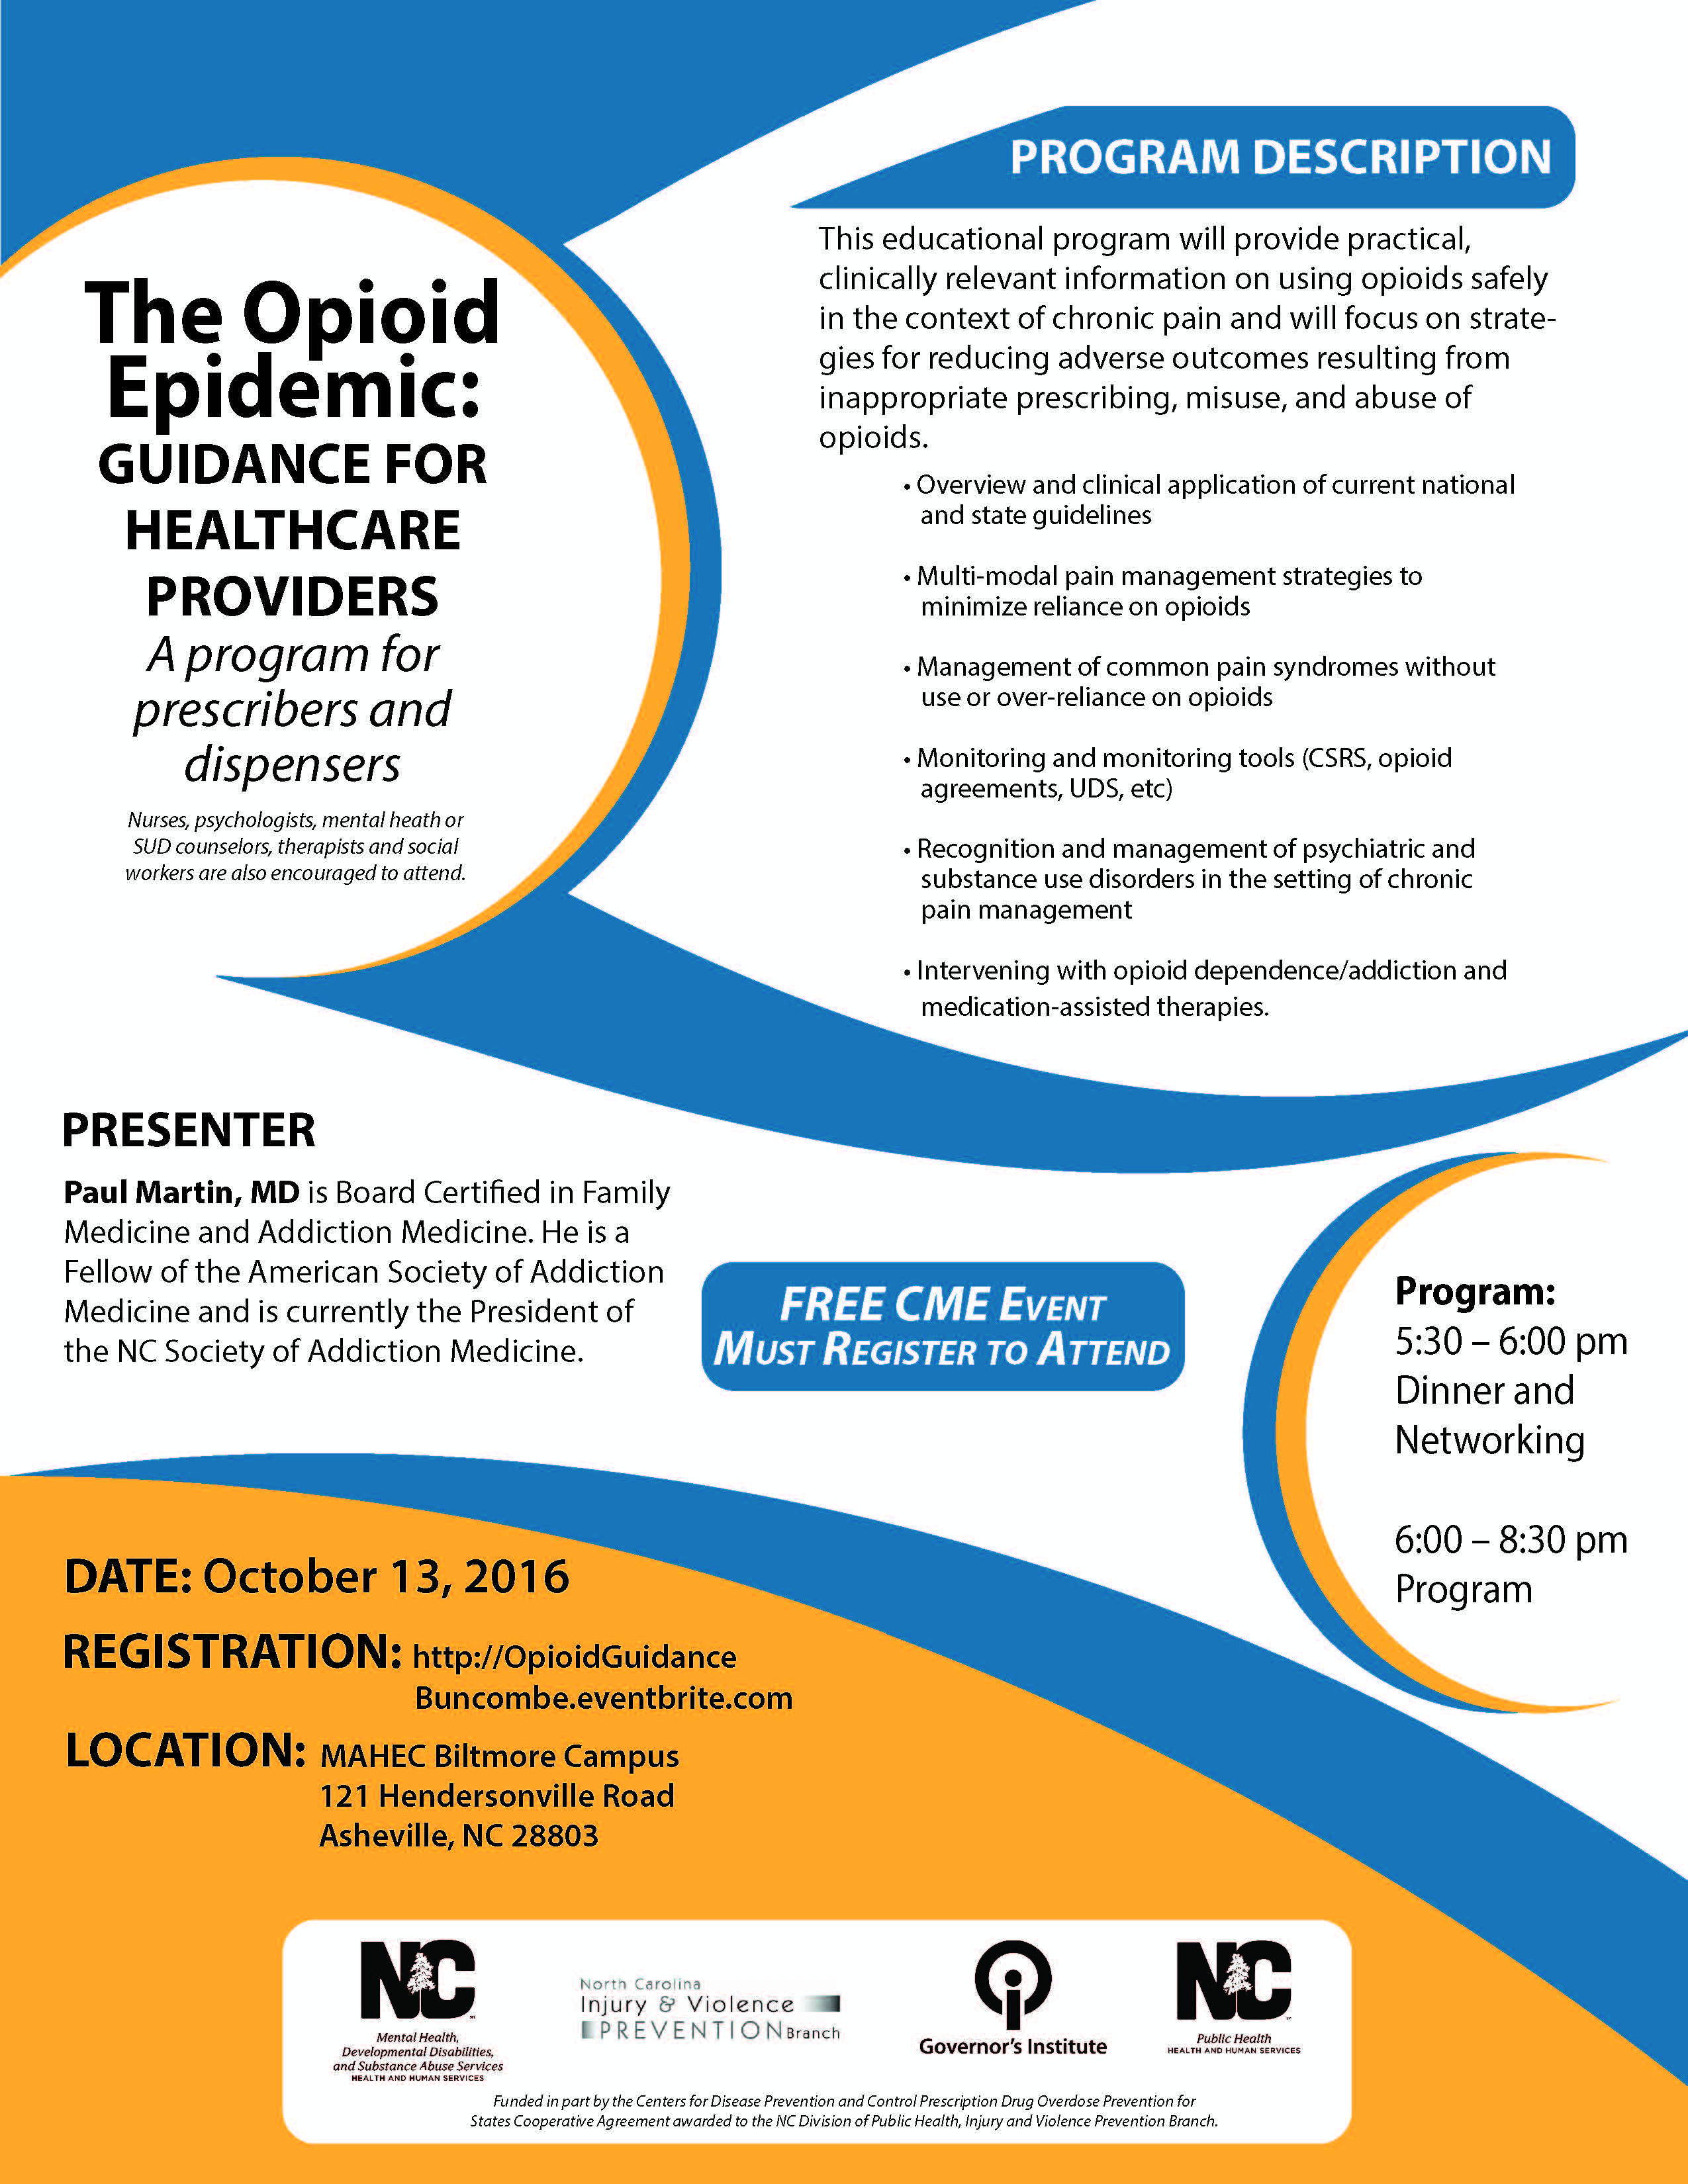 Opioid Guidance Event Flyer 10.13.16